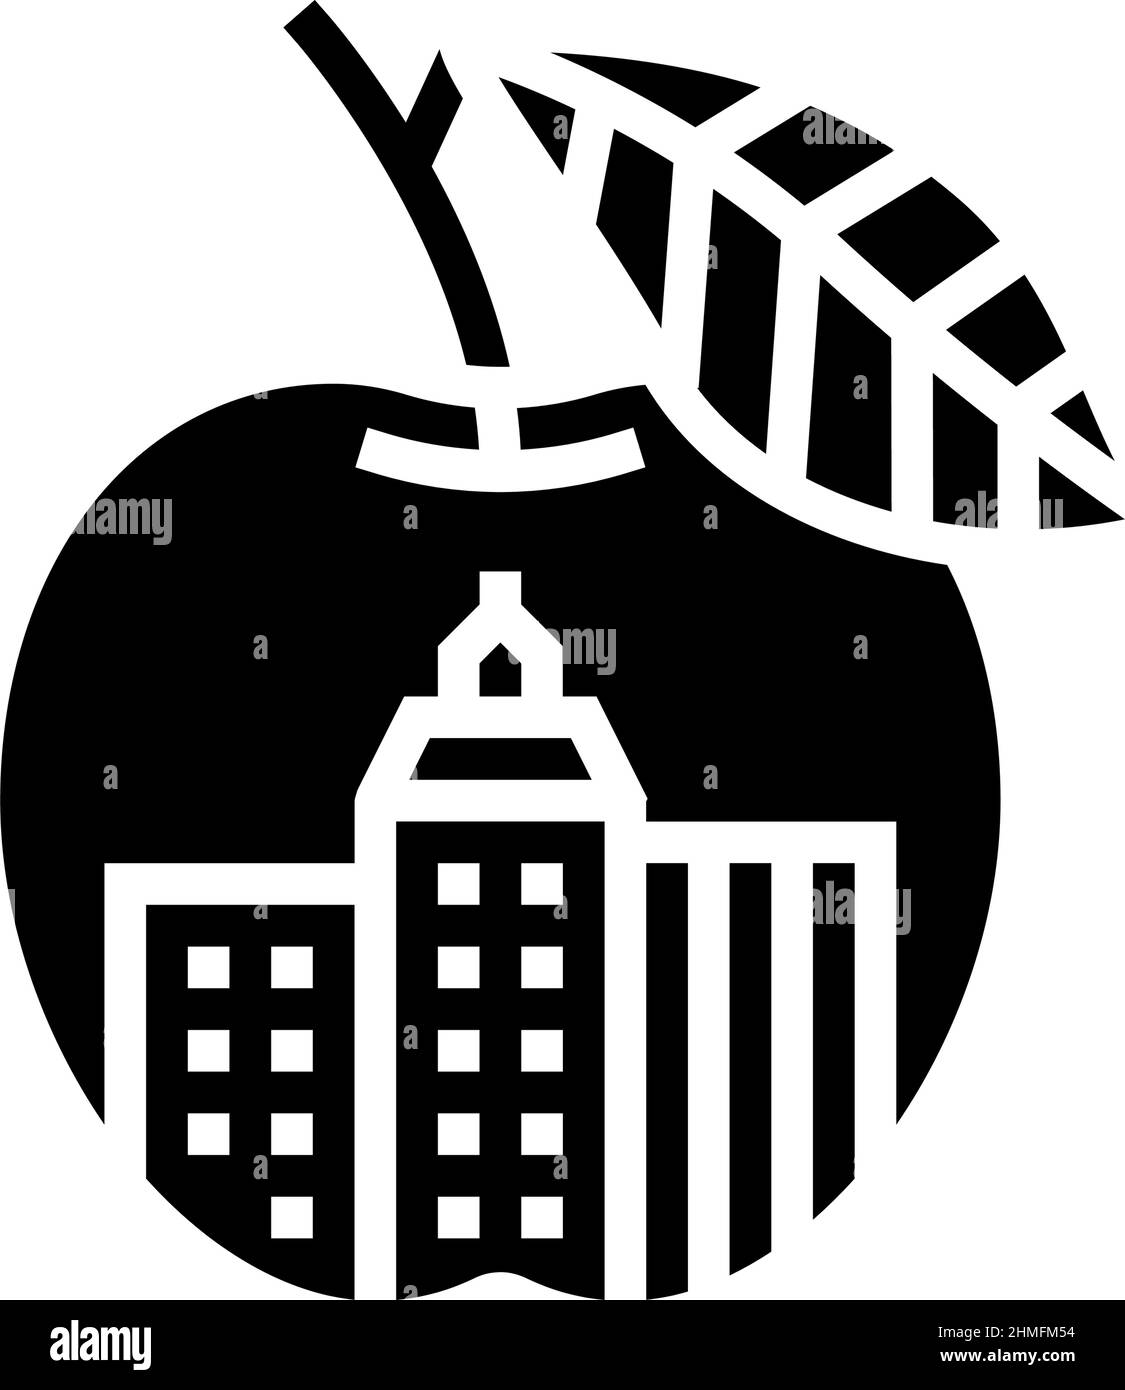 nyc big apple glyph icon vector illustration Stock Vector